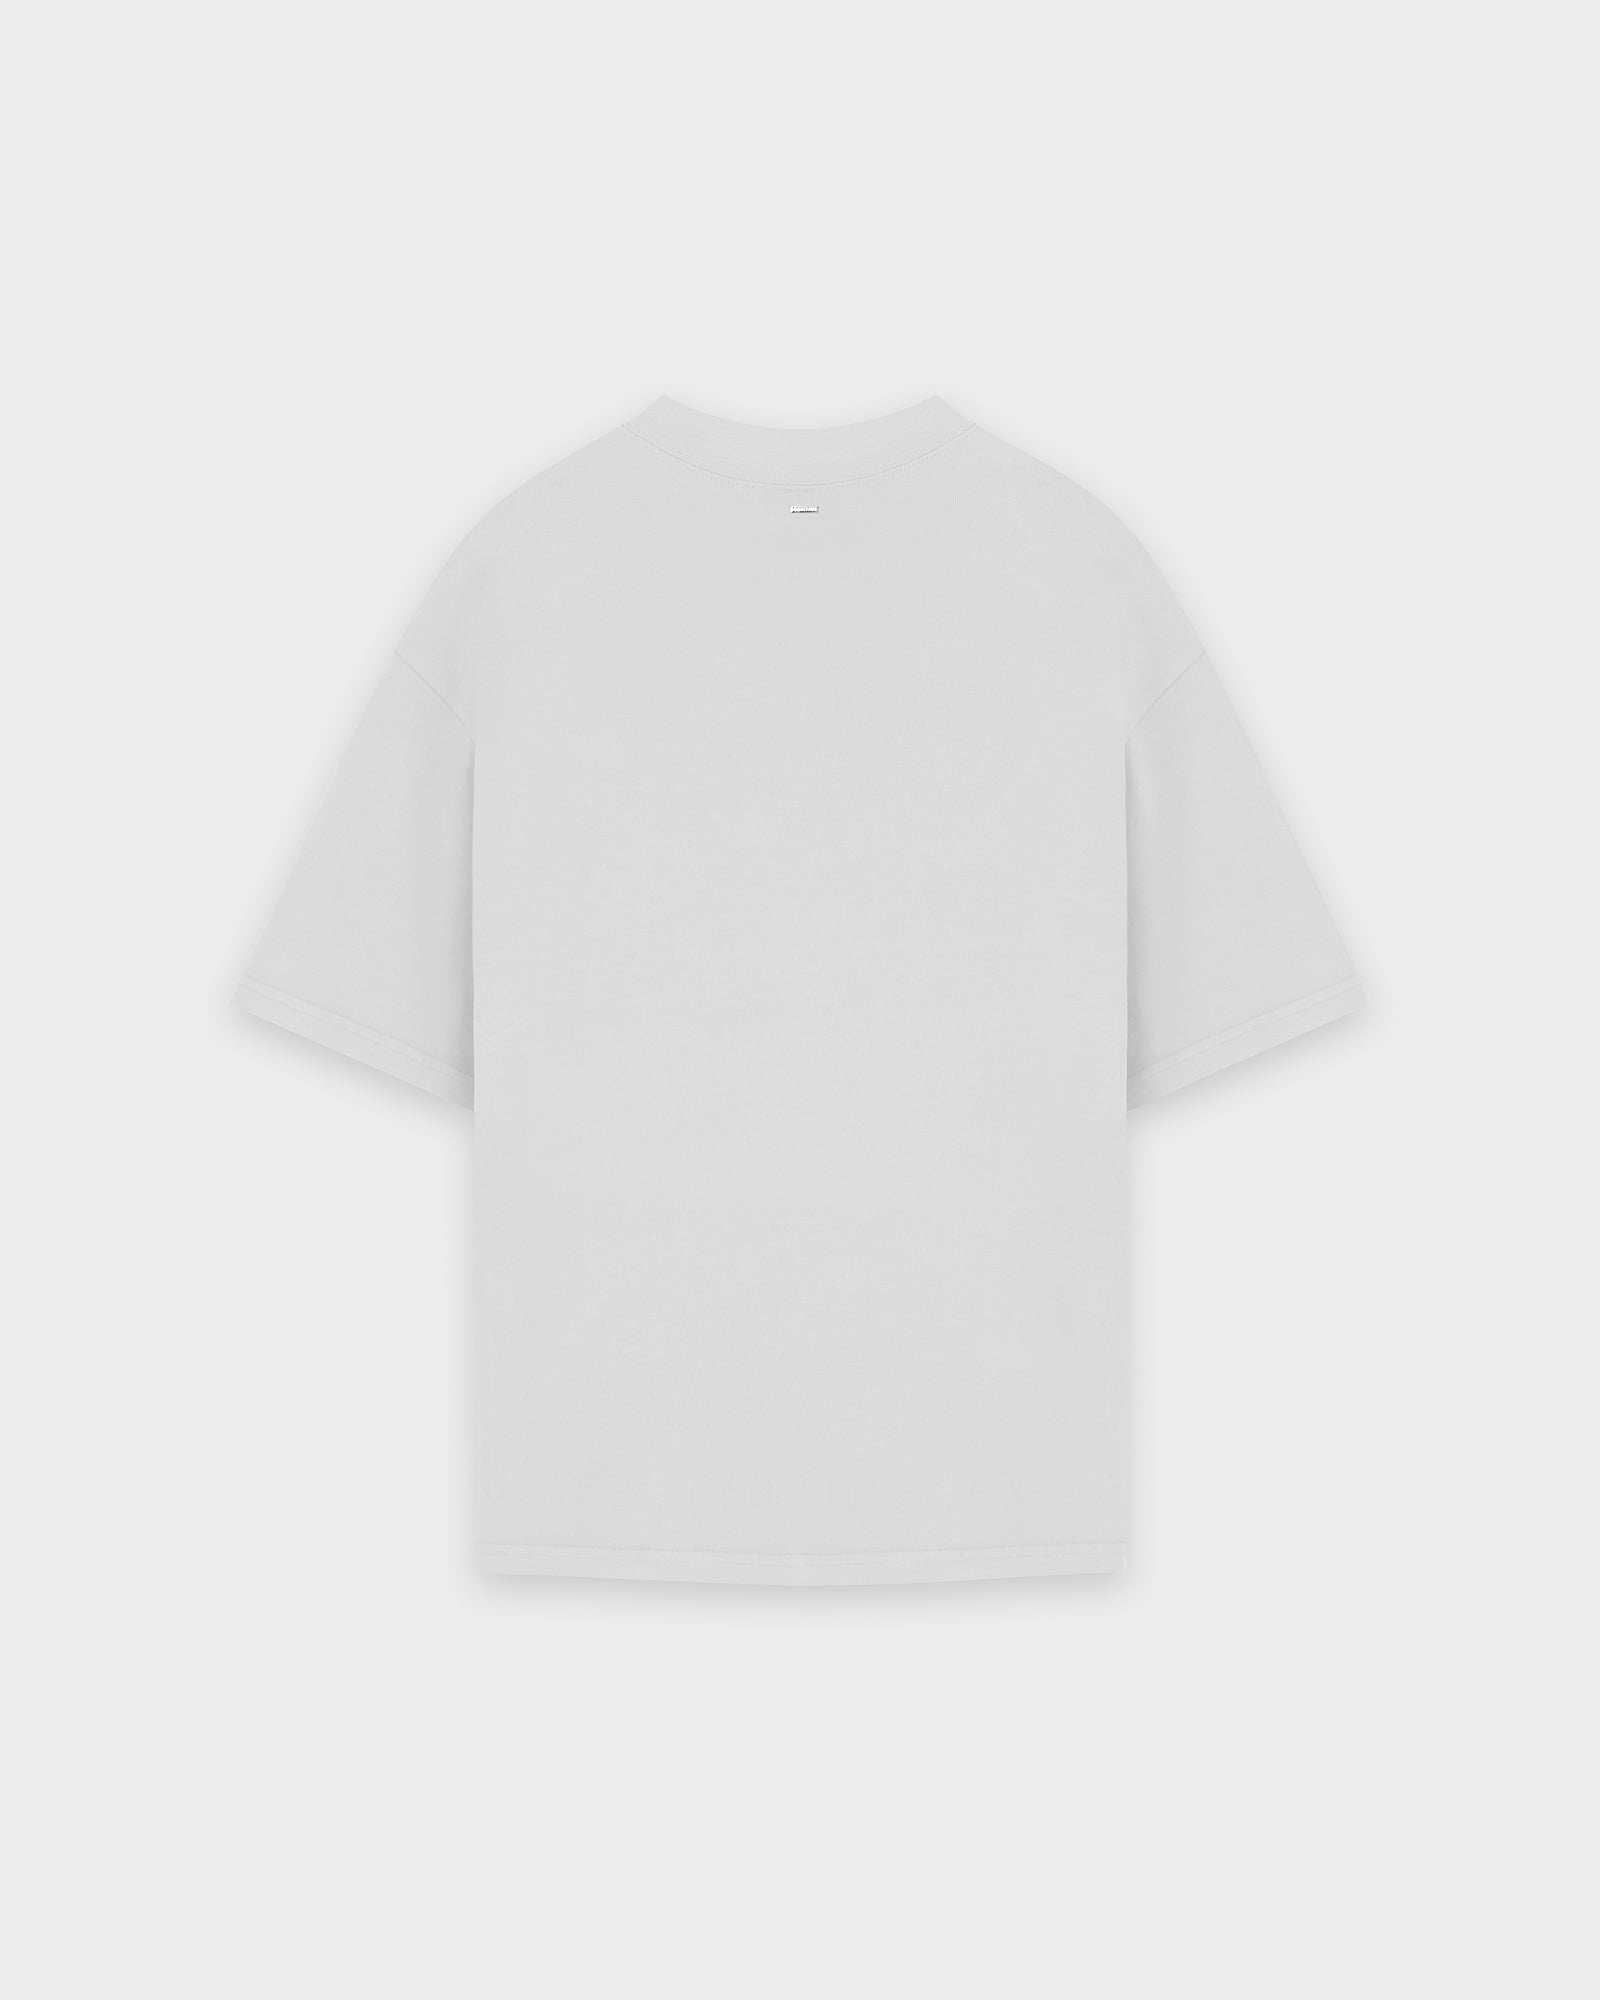 Heavy Light Grey Basic T-Shirt